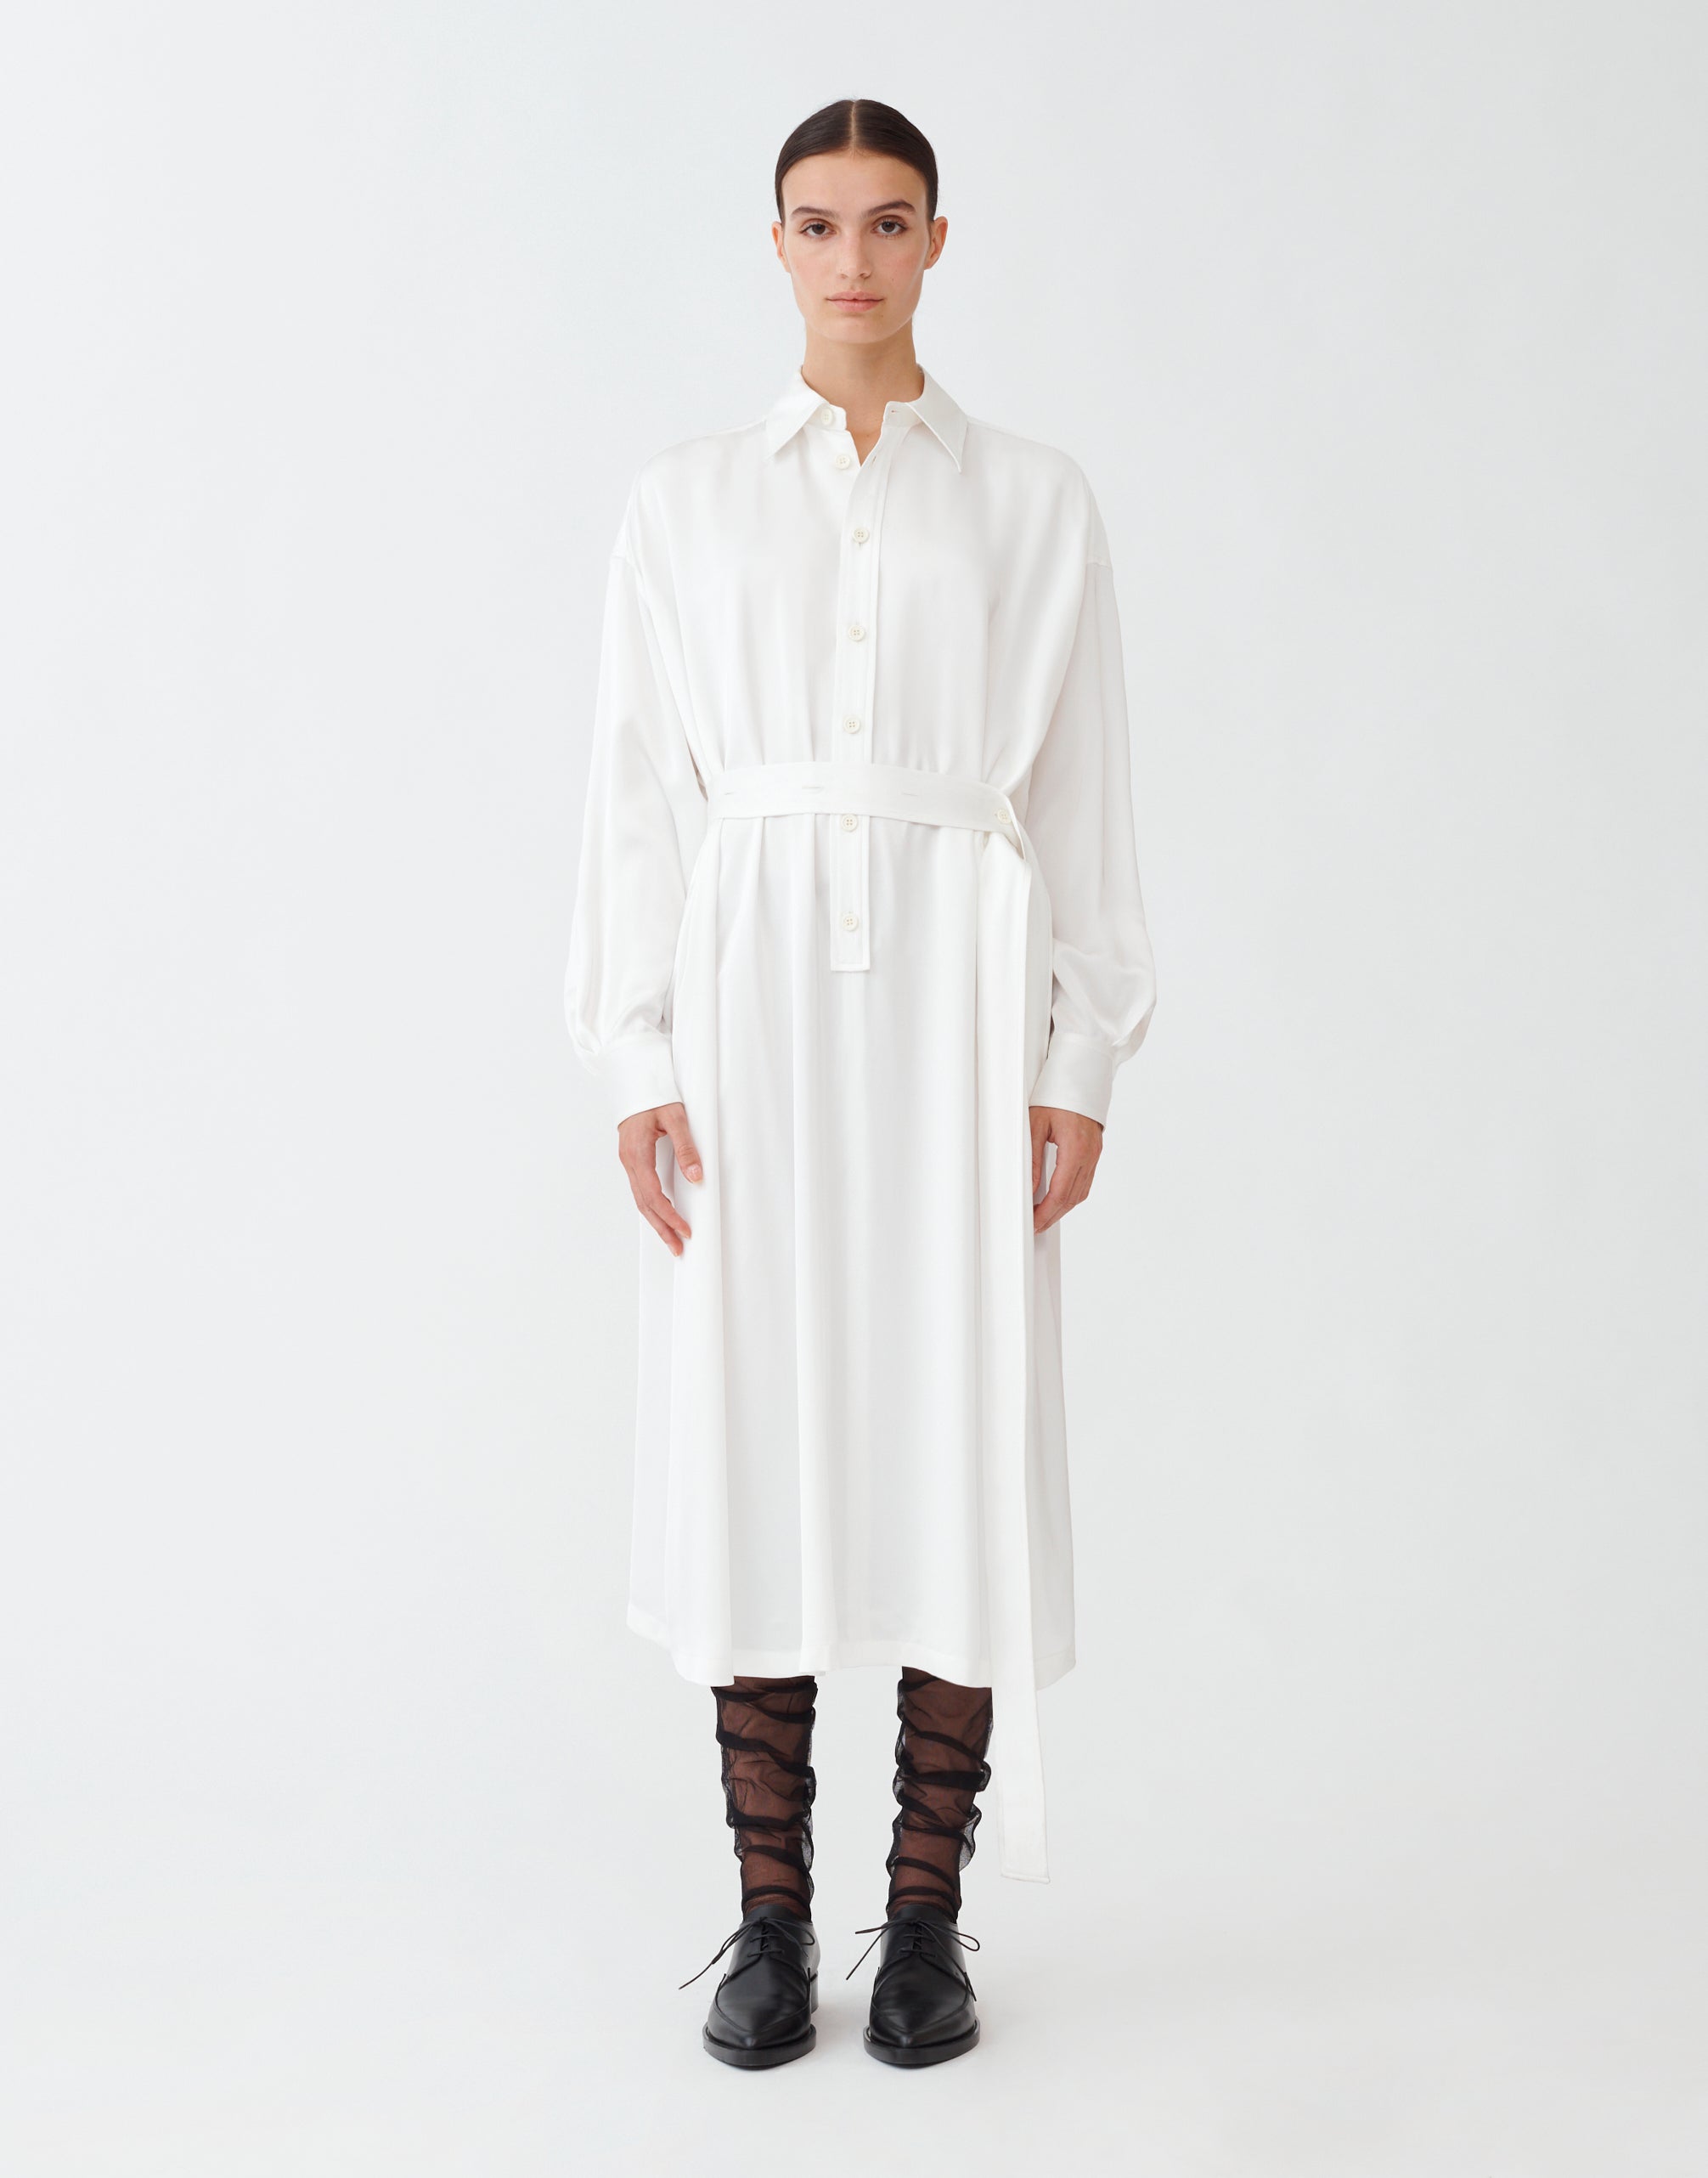 Viscose shirt dress, white